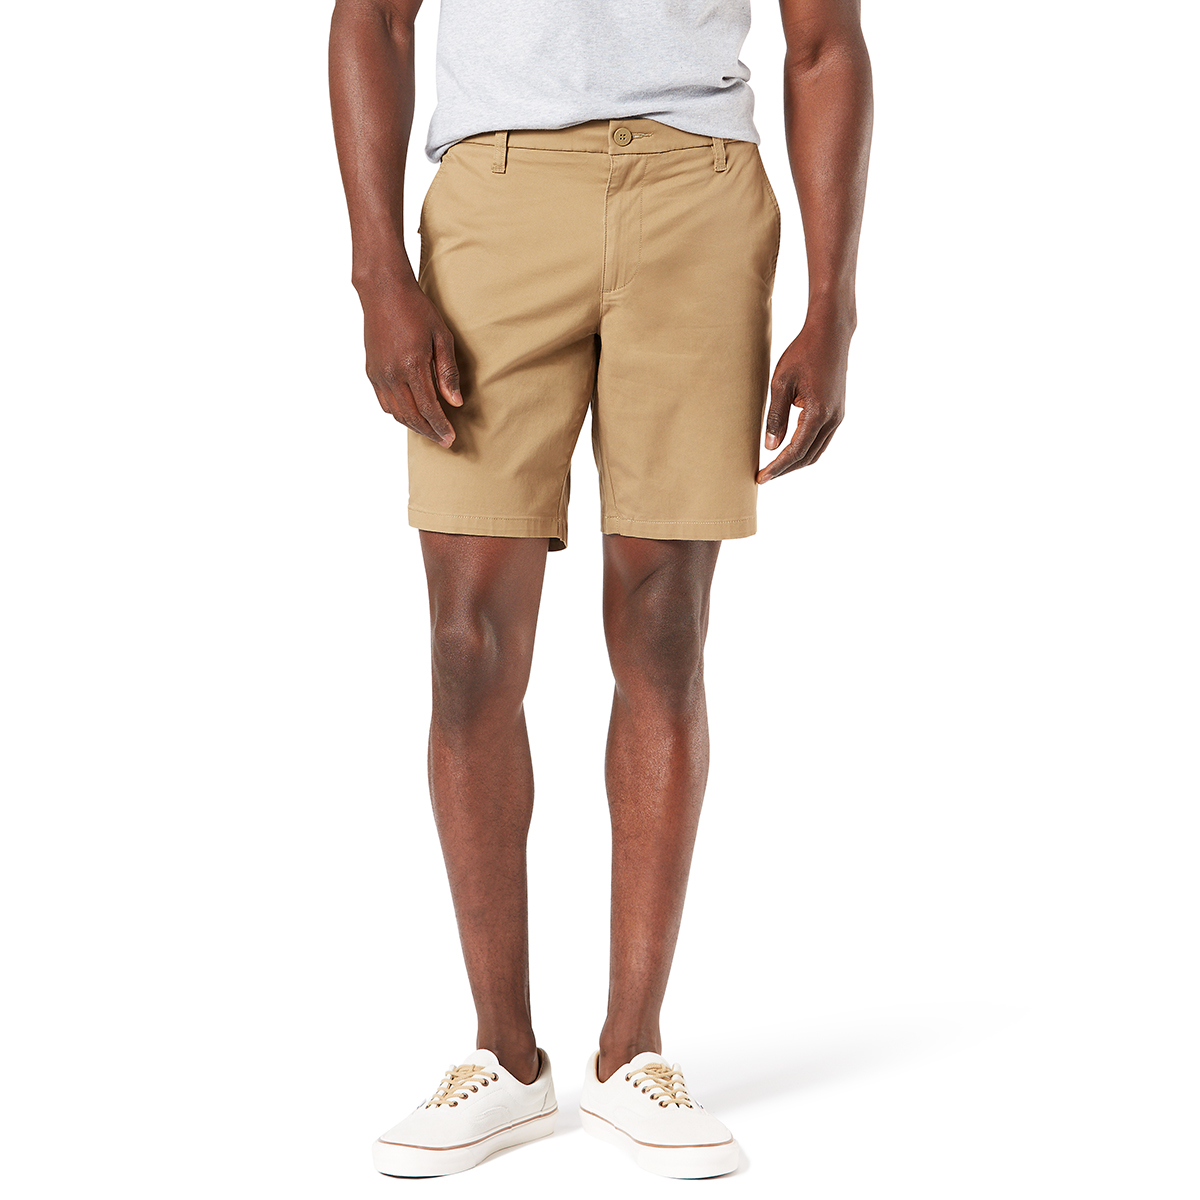 Dockers Men's Ultimate Straight Fit Short - Brown, 30